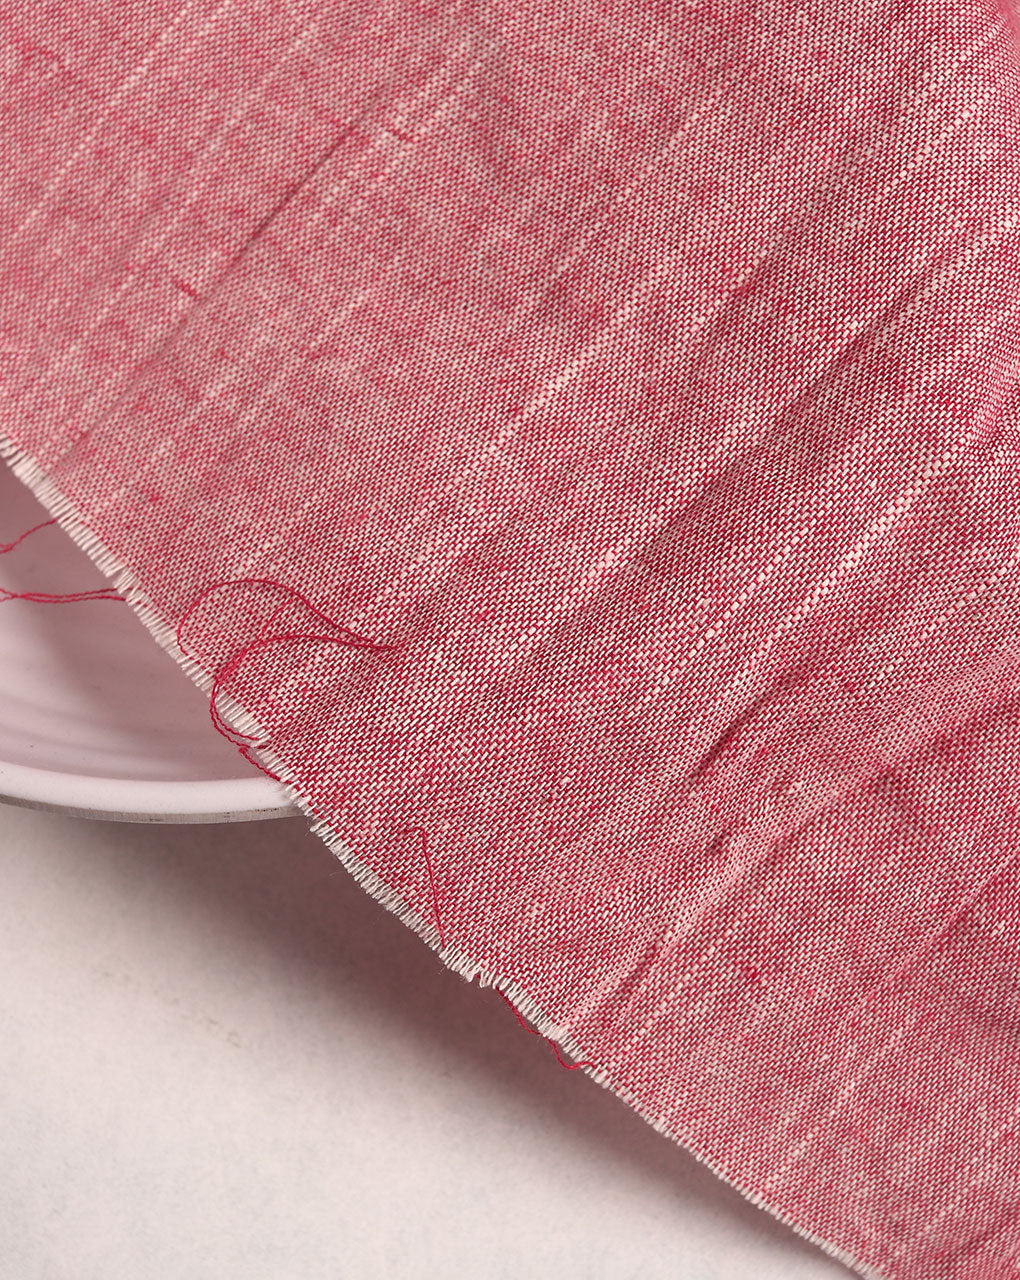 Red Chambray Slub Cotton Fabric